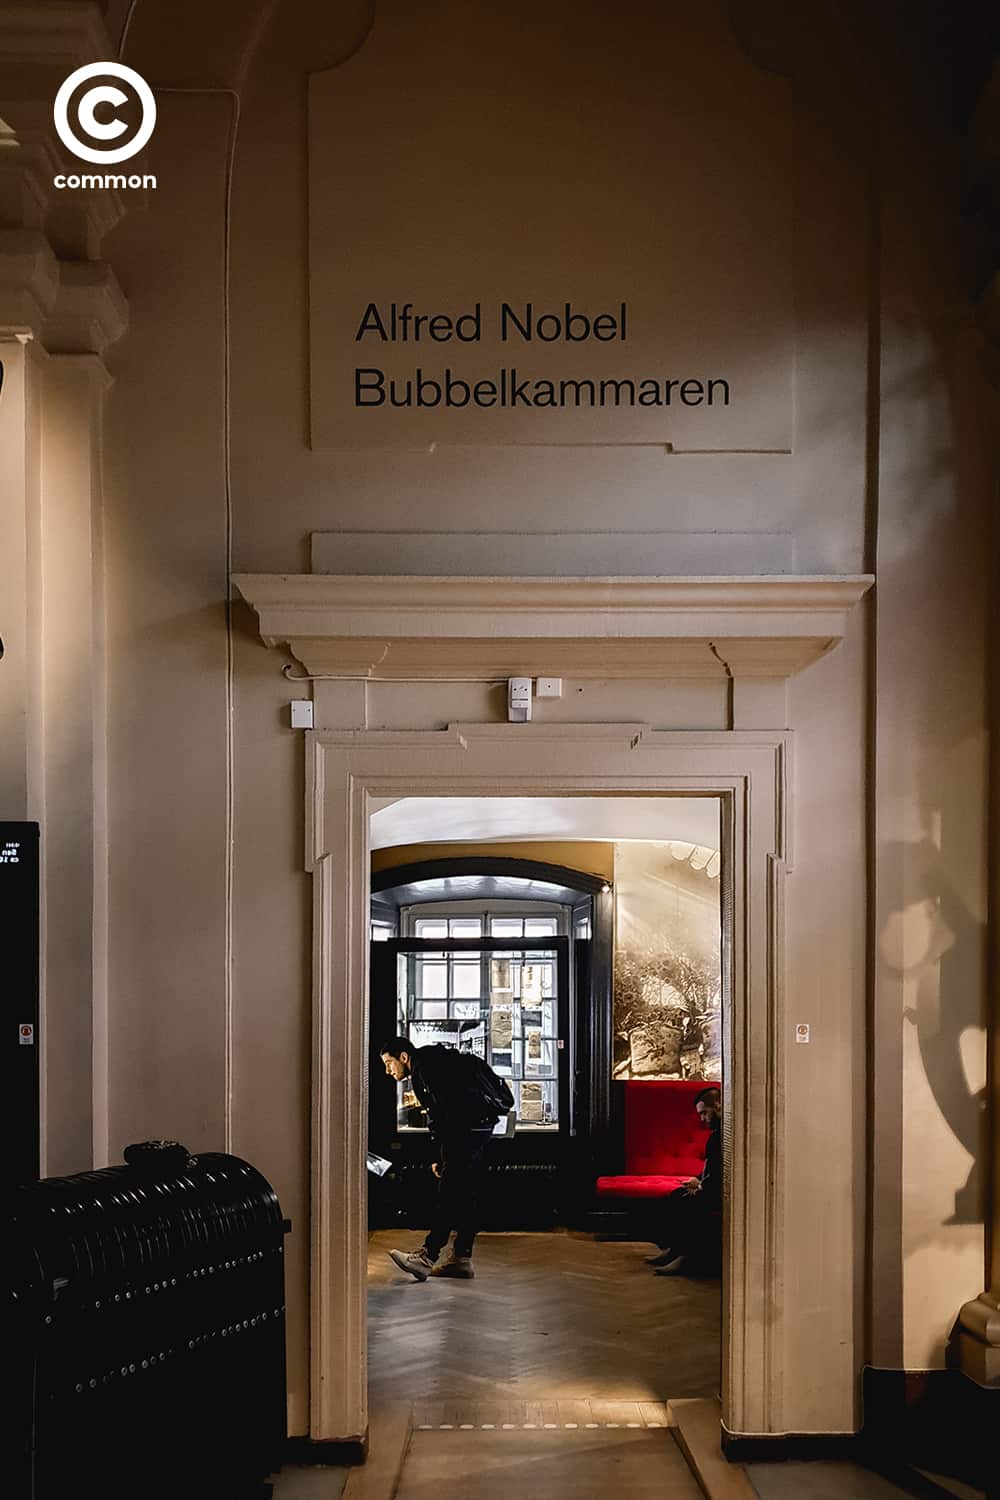 Nobel Museum 